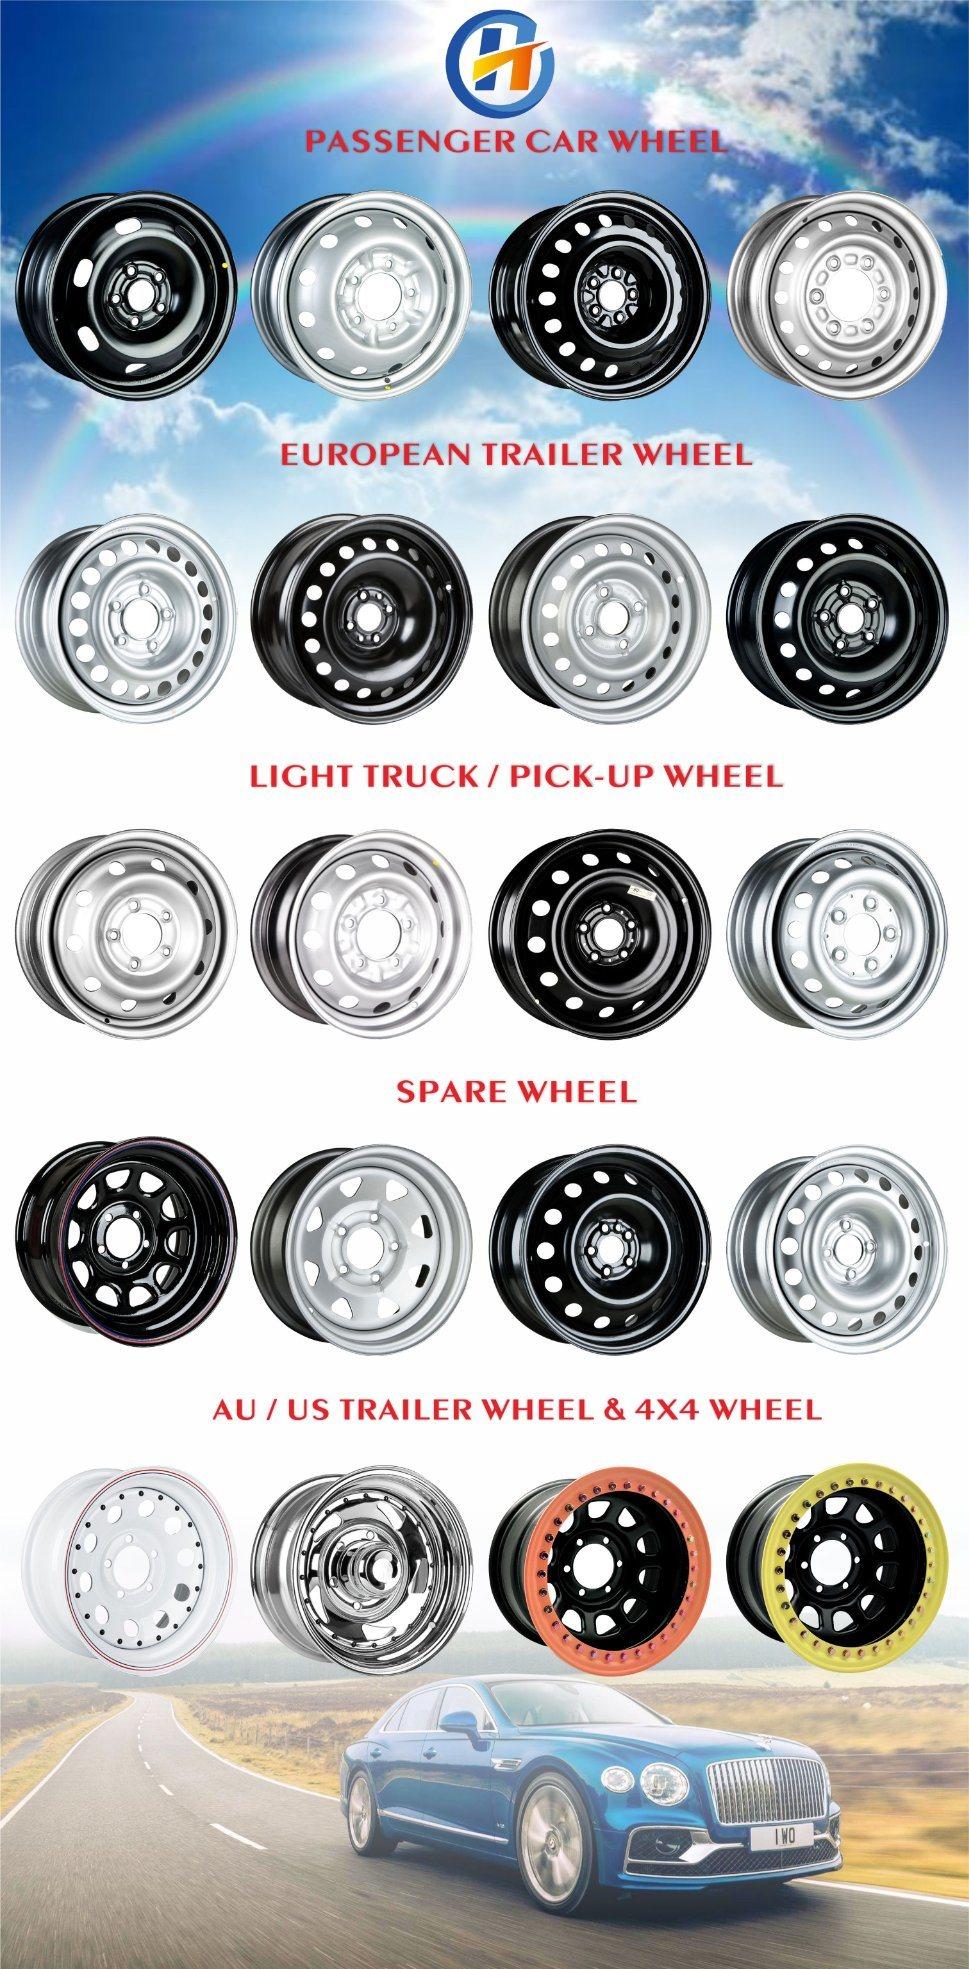 H&T Wheel 334201 High Performance 13X4.5 PCD 4X100 Snow Black Steel 13 Inch Wheel Rims for Sale